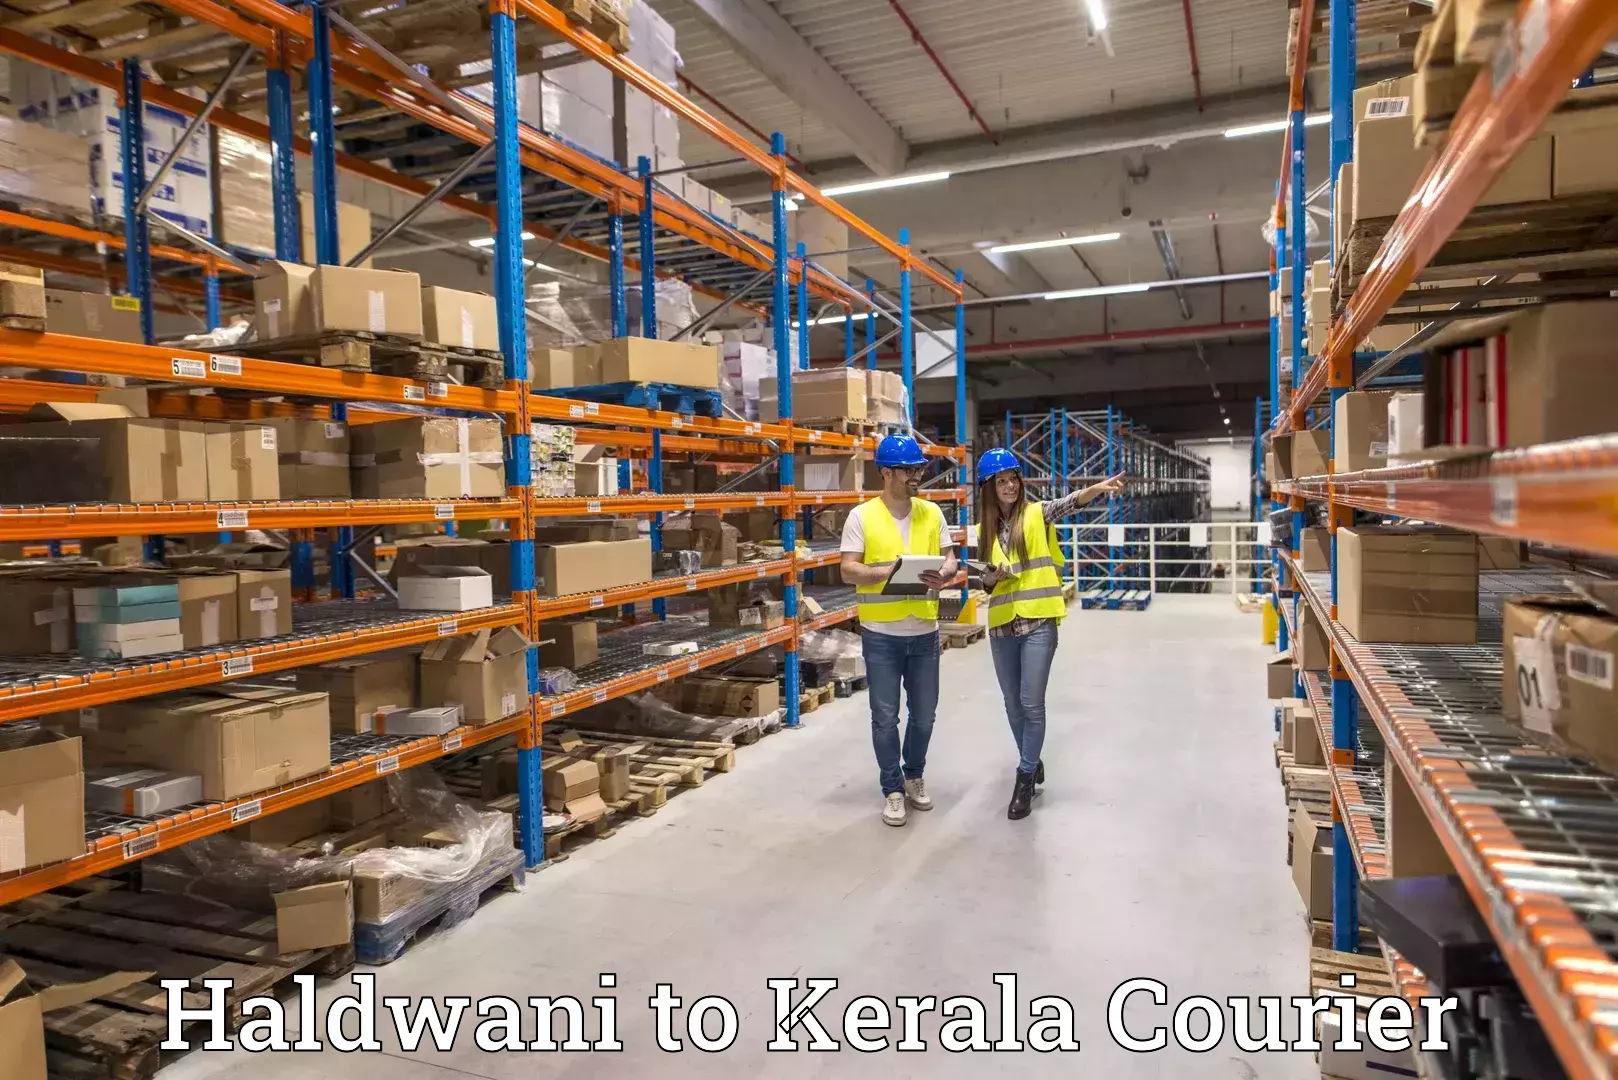 User-friendly delivery service Haldwani to Kochi